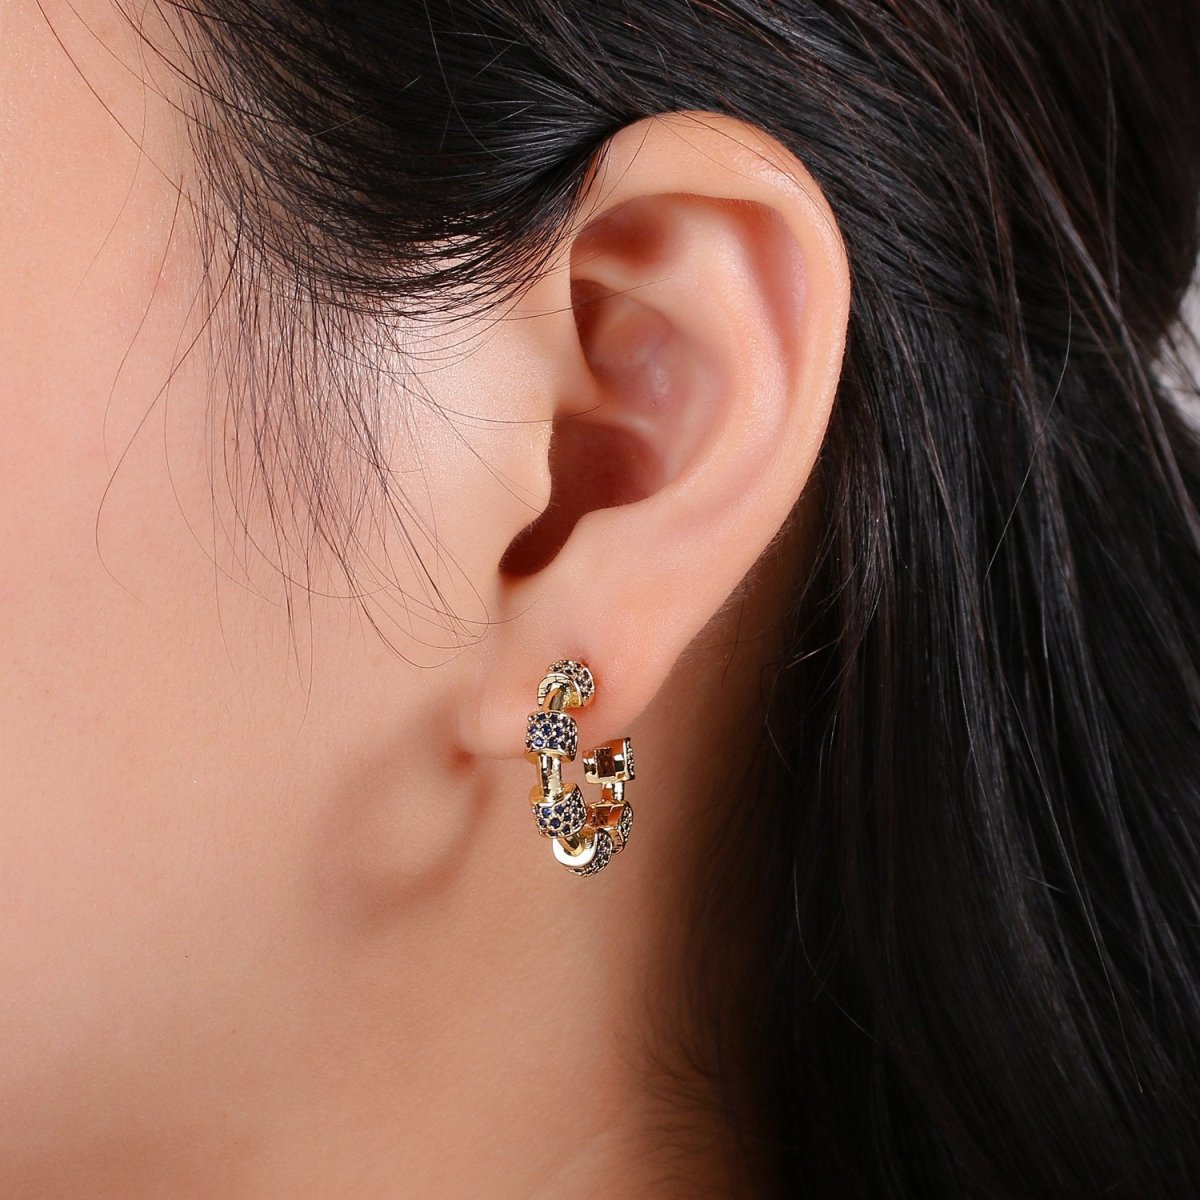 20mm hoop earrings, Gold hoop earrings, Chunky hoops, minimalist hoop earrings, cz earrings Black Blue Clear Turquoise Earring Q-106 - Q-110 Q-112 - DLUXCA